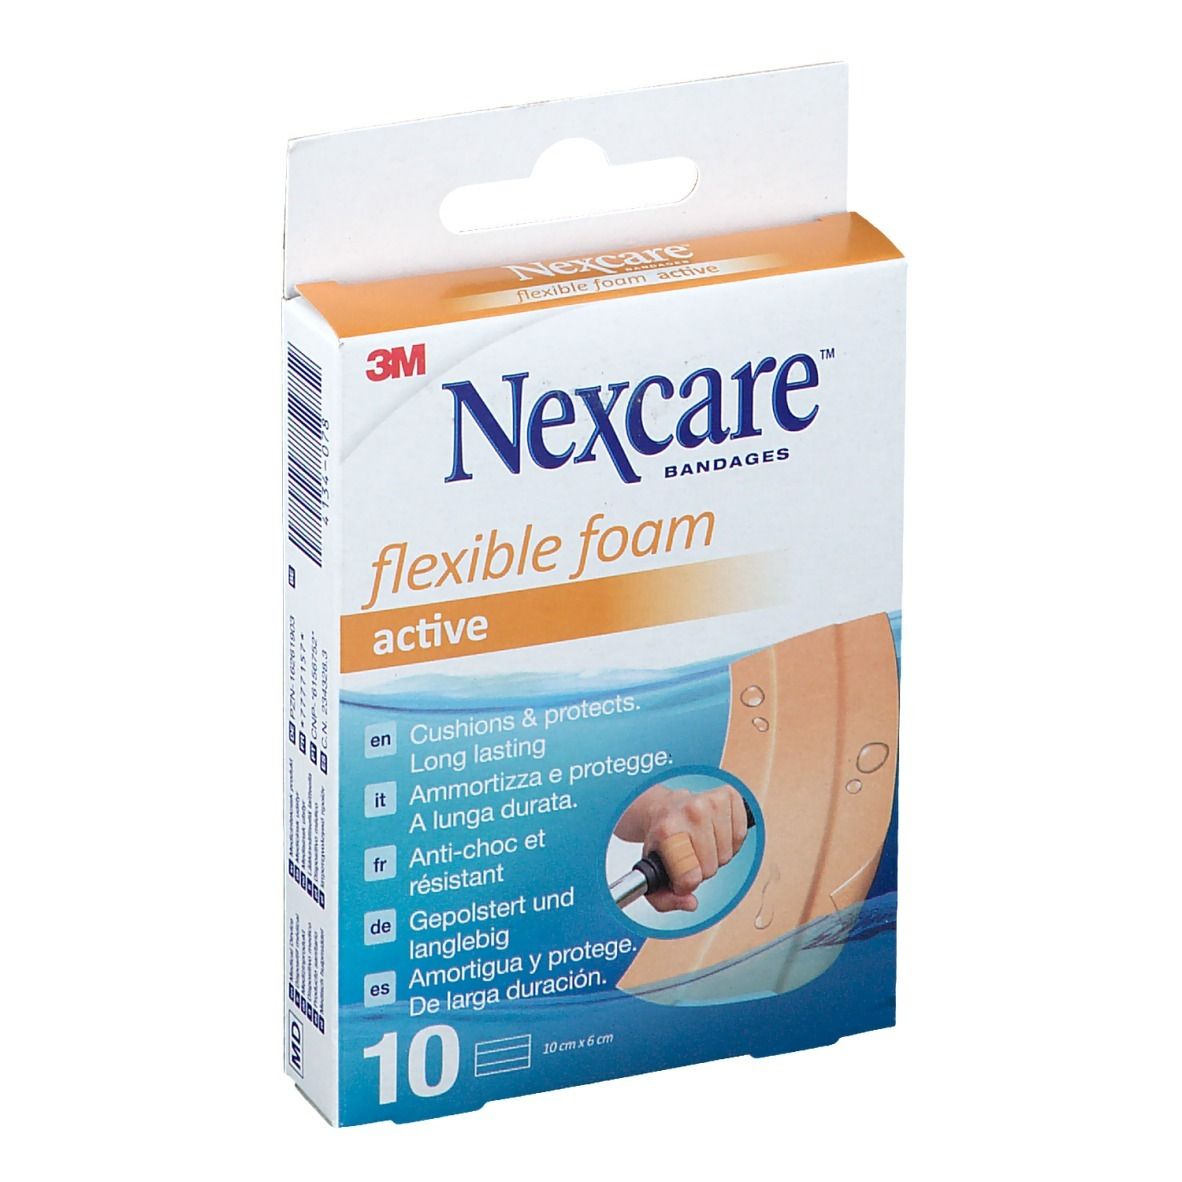 Image of Nexcare™ flexible foam active 10 x, x 6 cm